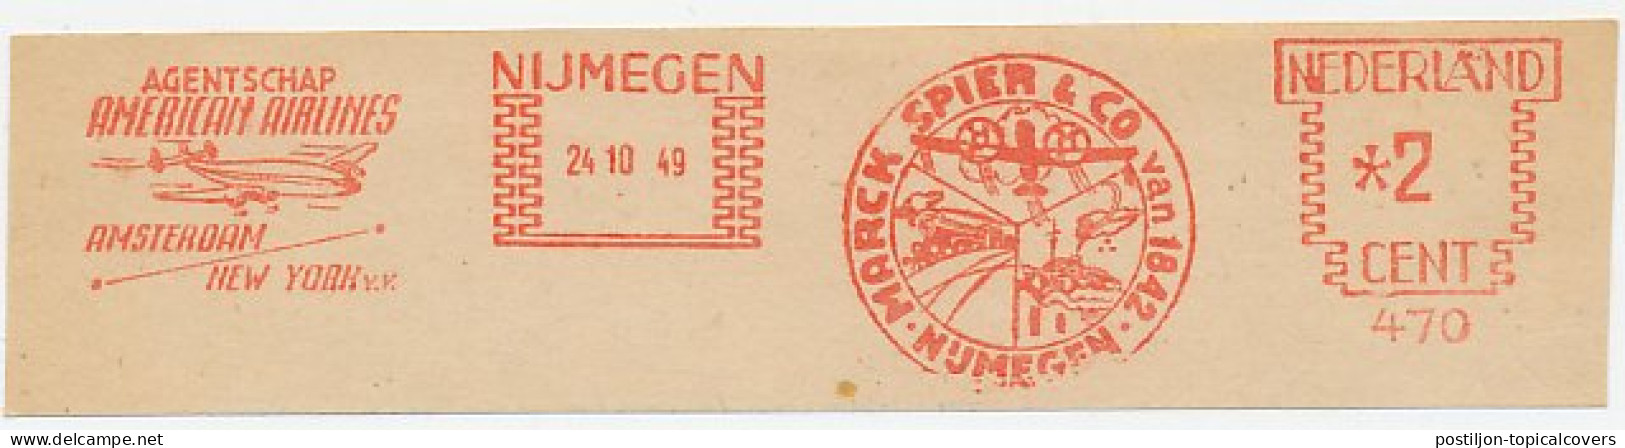 Meter Cut Netherlands 1949 Agency American Airlines - Amsterdam - New York - Airplane - Airplanes